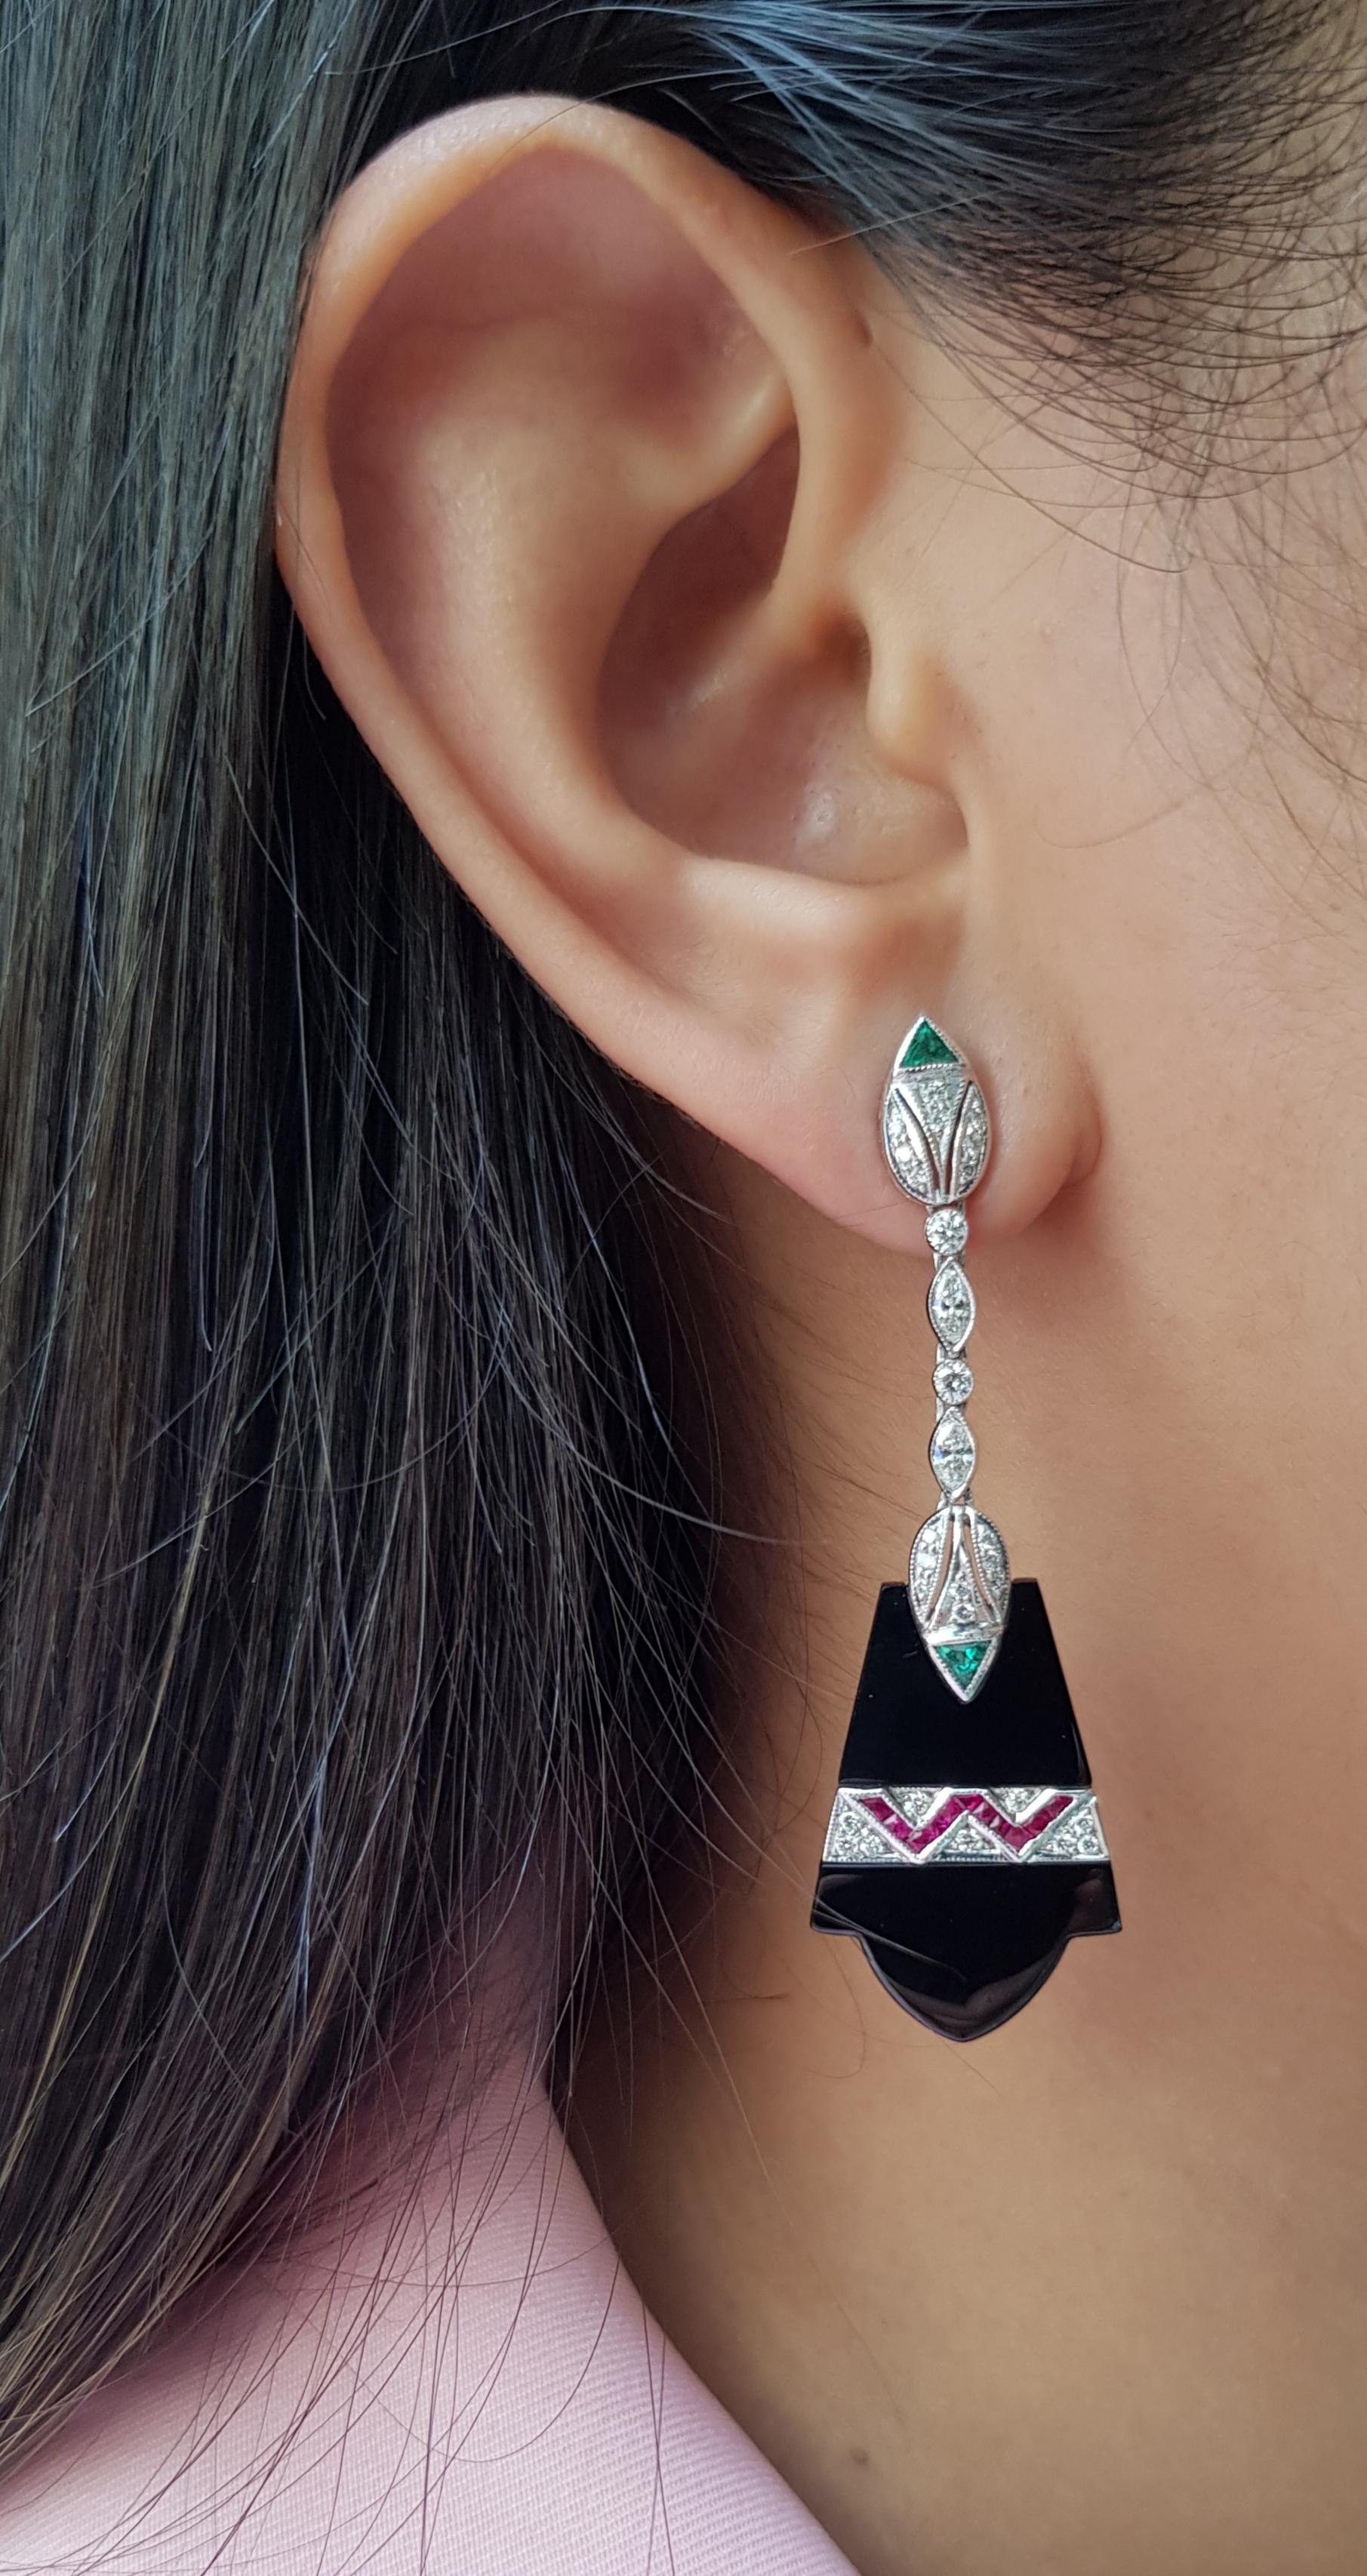 Onyx with Emerald 0.61 carat, Ruby 0.67 carat and Diamond 0.90 carat Earrings set in 18 Karat White Gold Settings

Width: 1.8 cm
Length: 5.8 cm 

